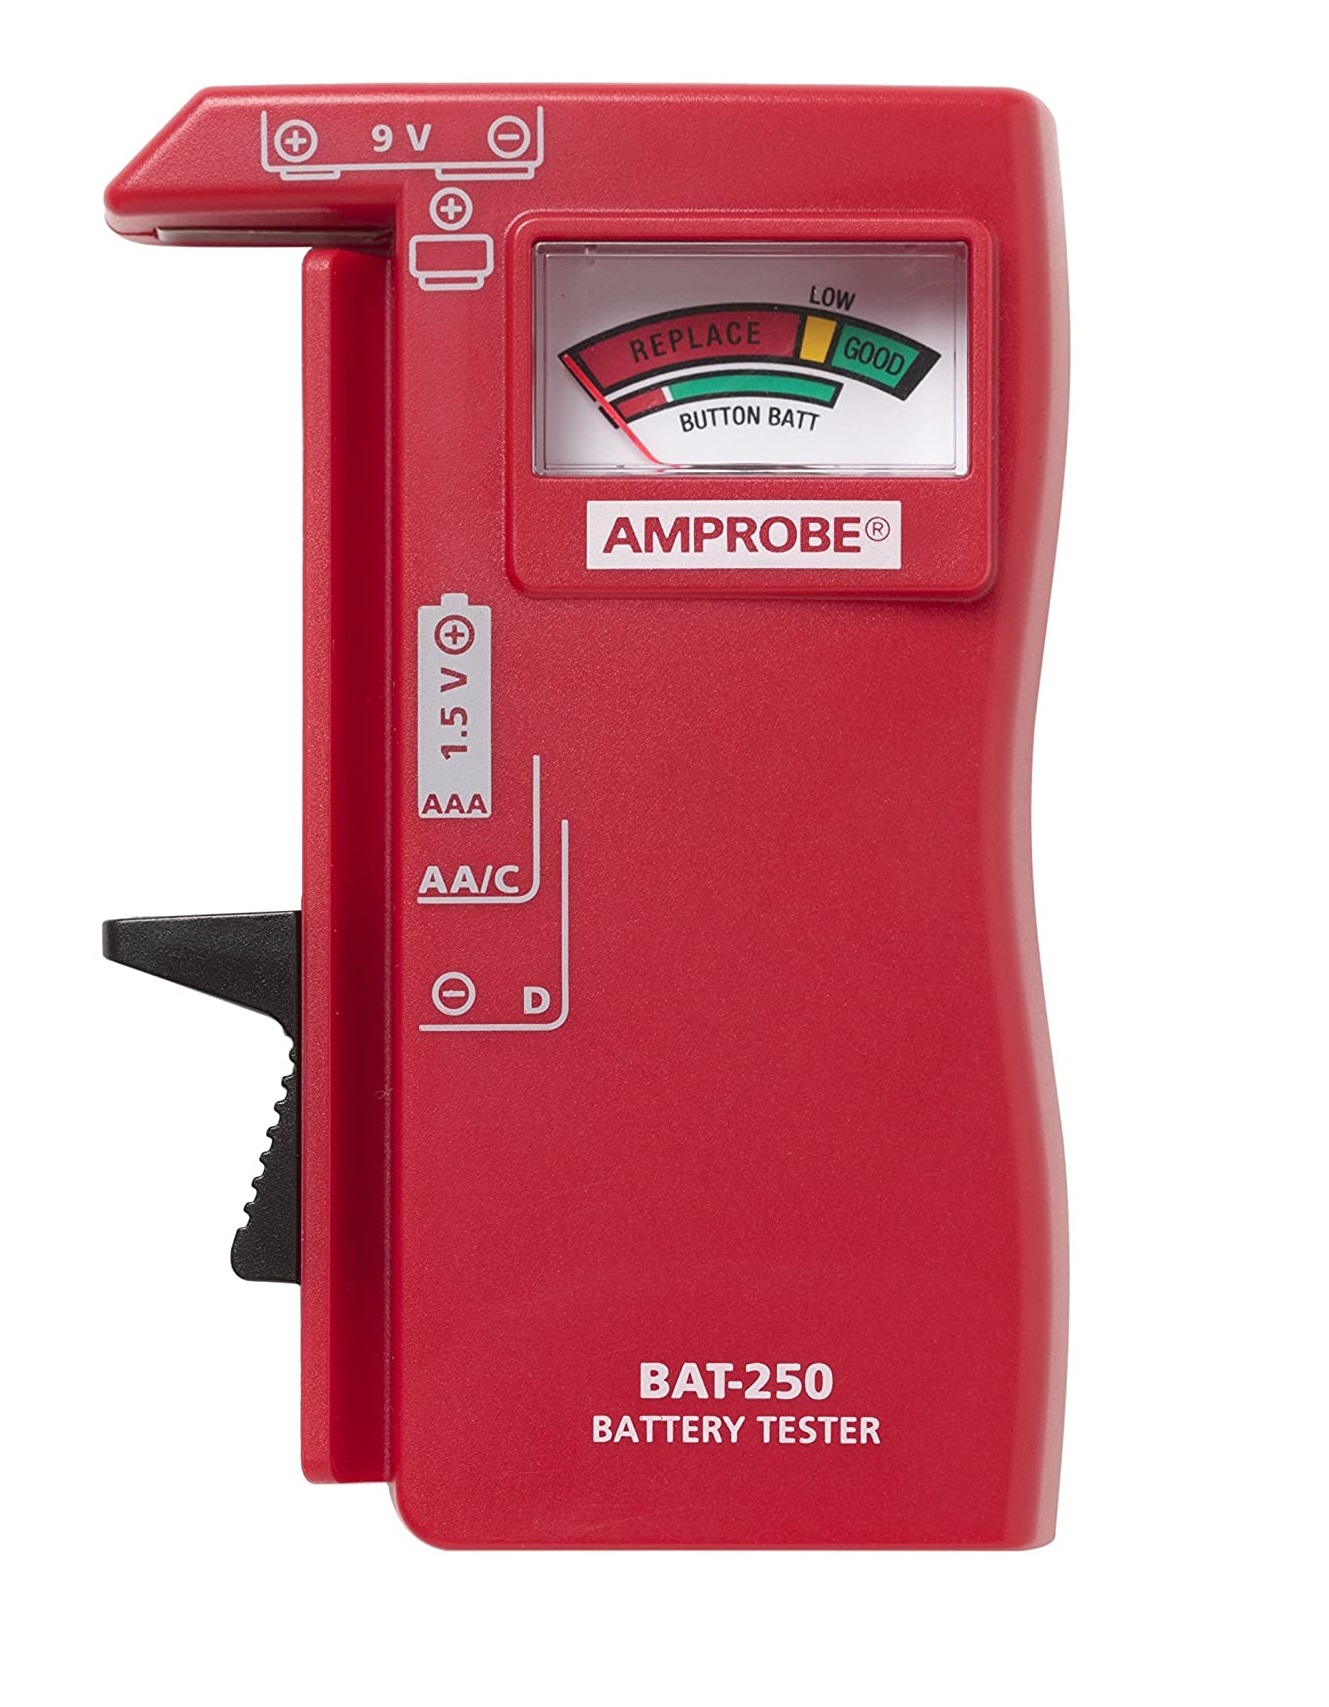 Amprobe Bat 250 Battery Tester